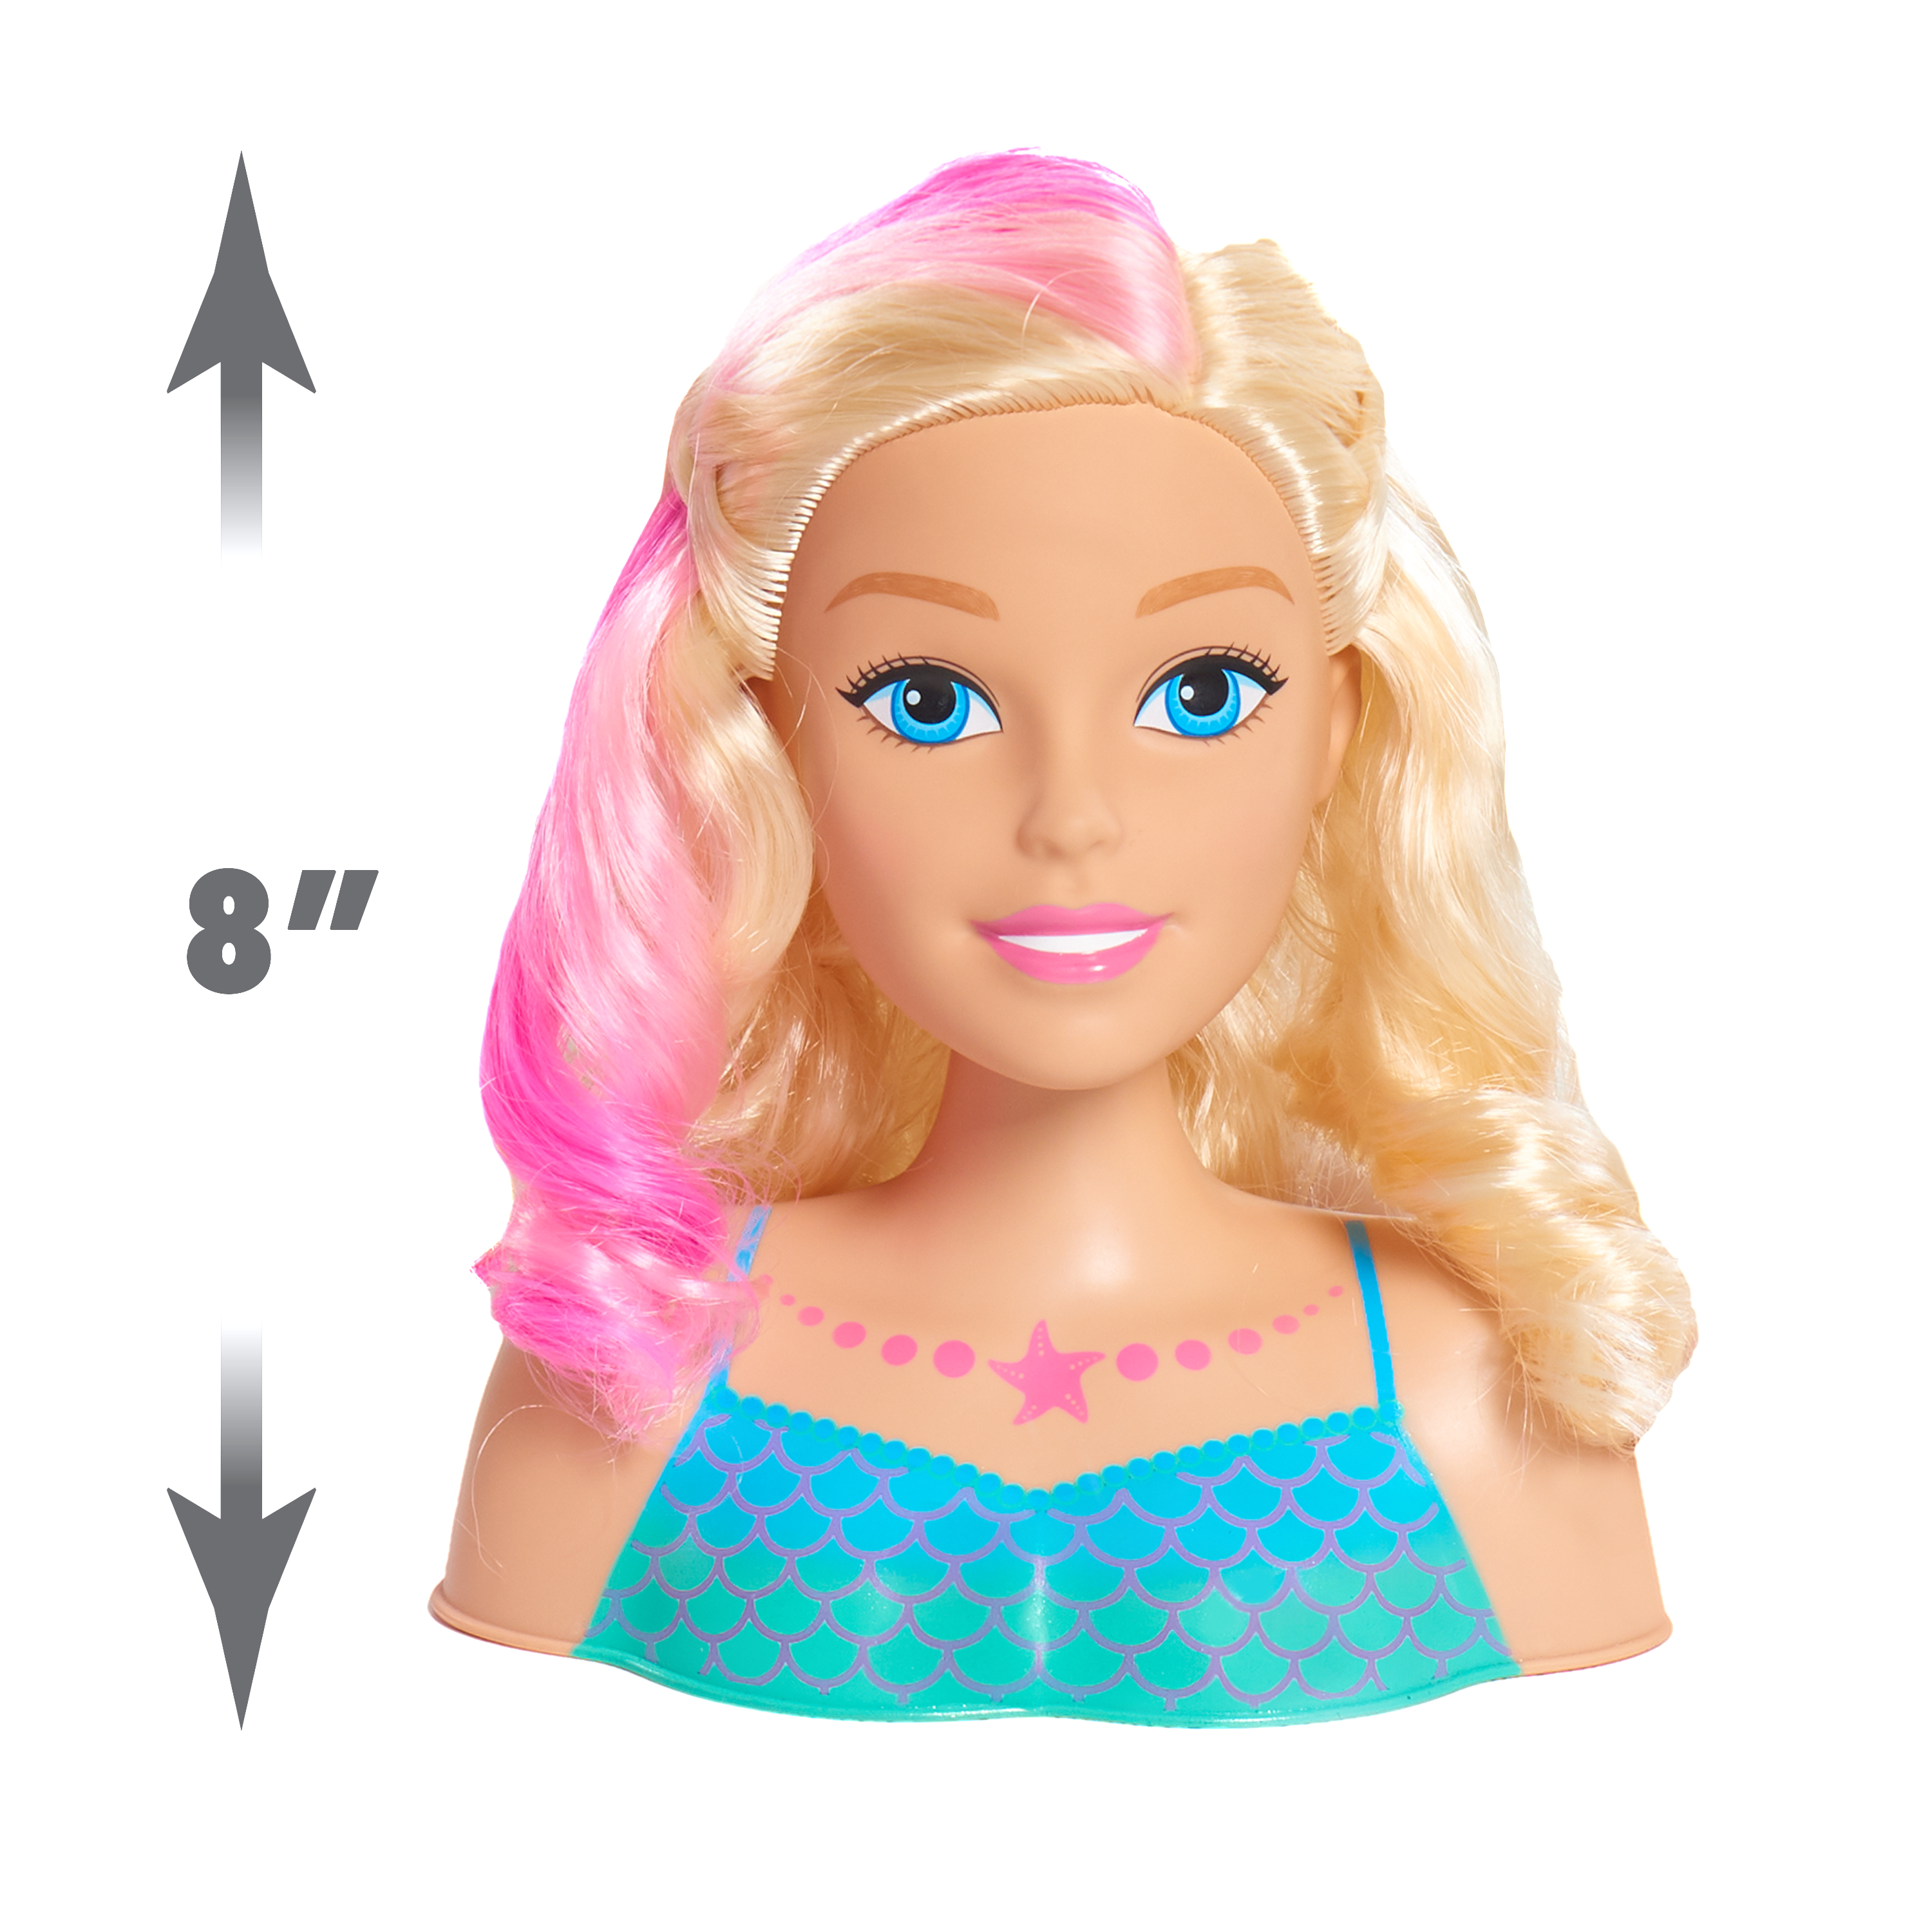 Mehrfarbig Dreamtopia JUST PLAY Stylinghead Barbie Spielset